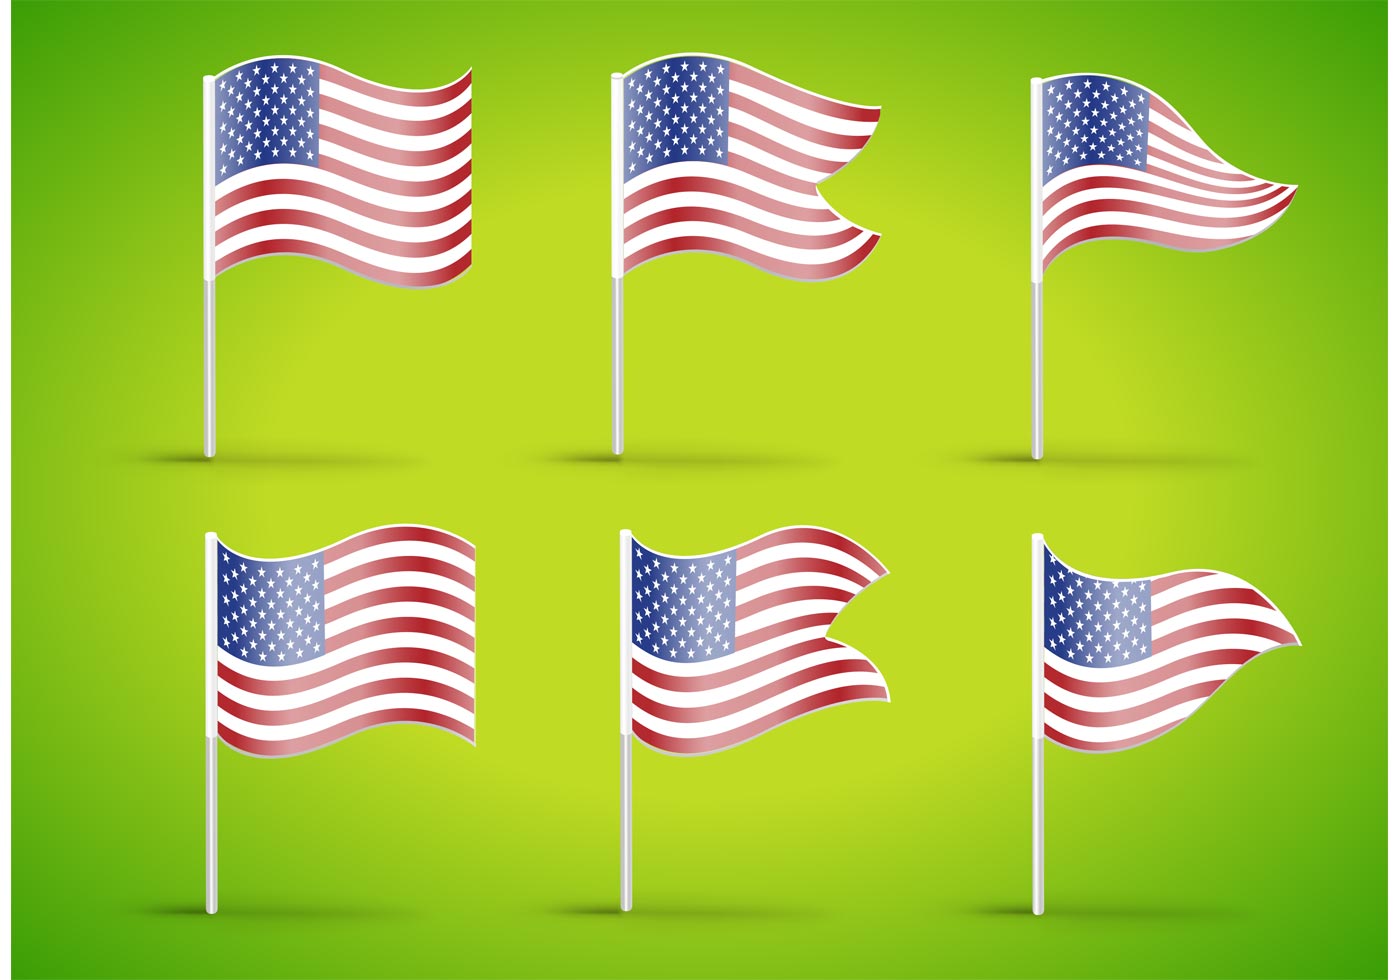 American Flag Vectors - Download Free Vector Art, Stock ...